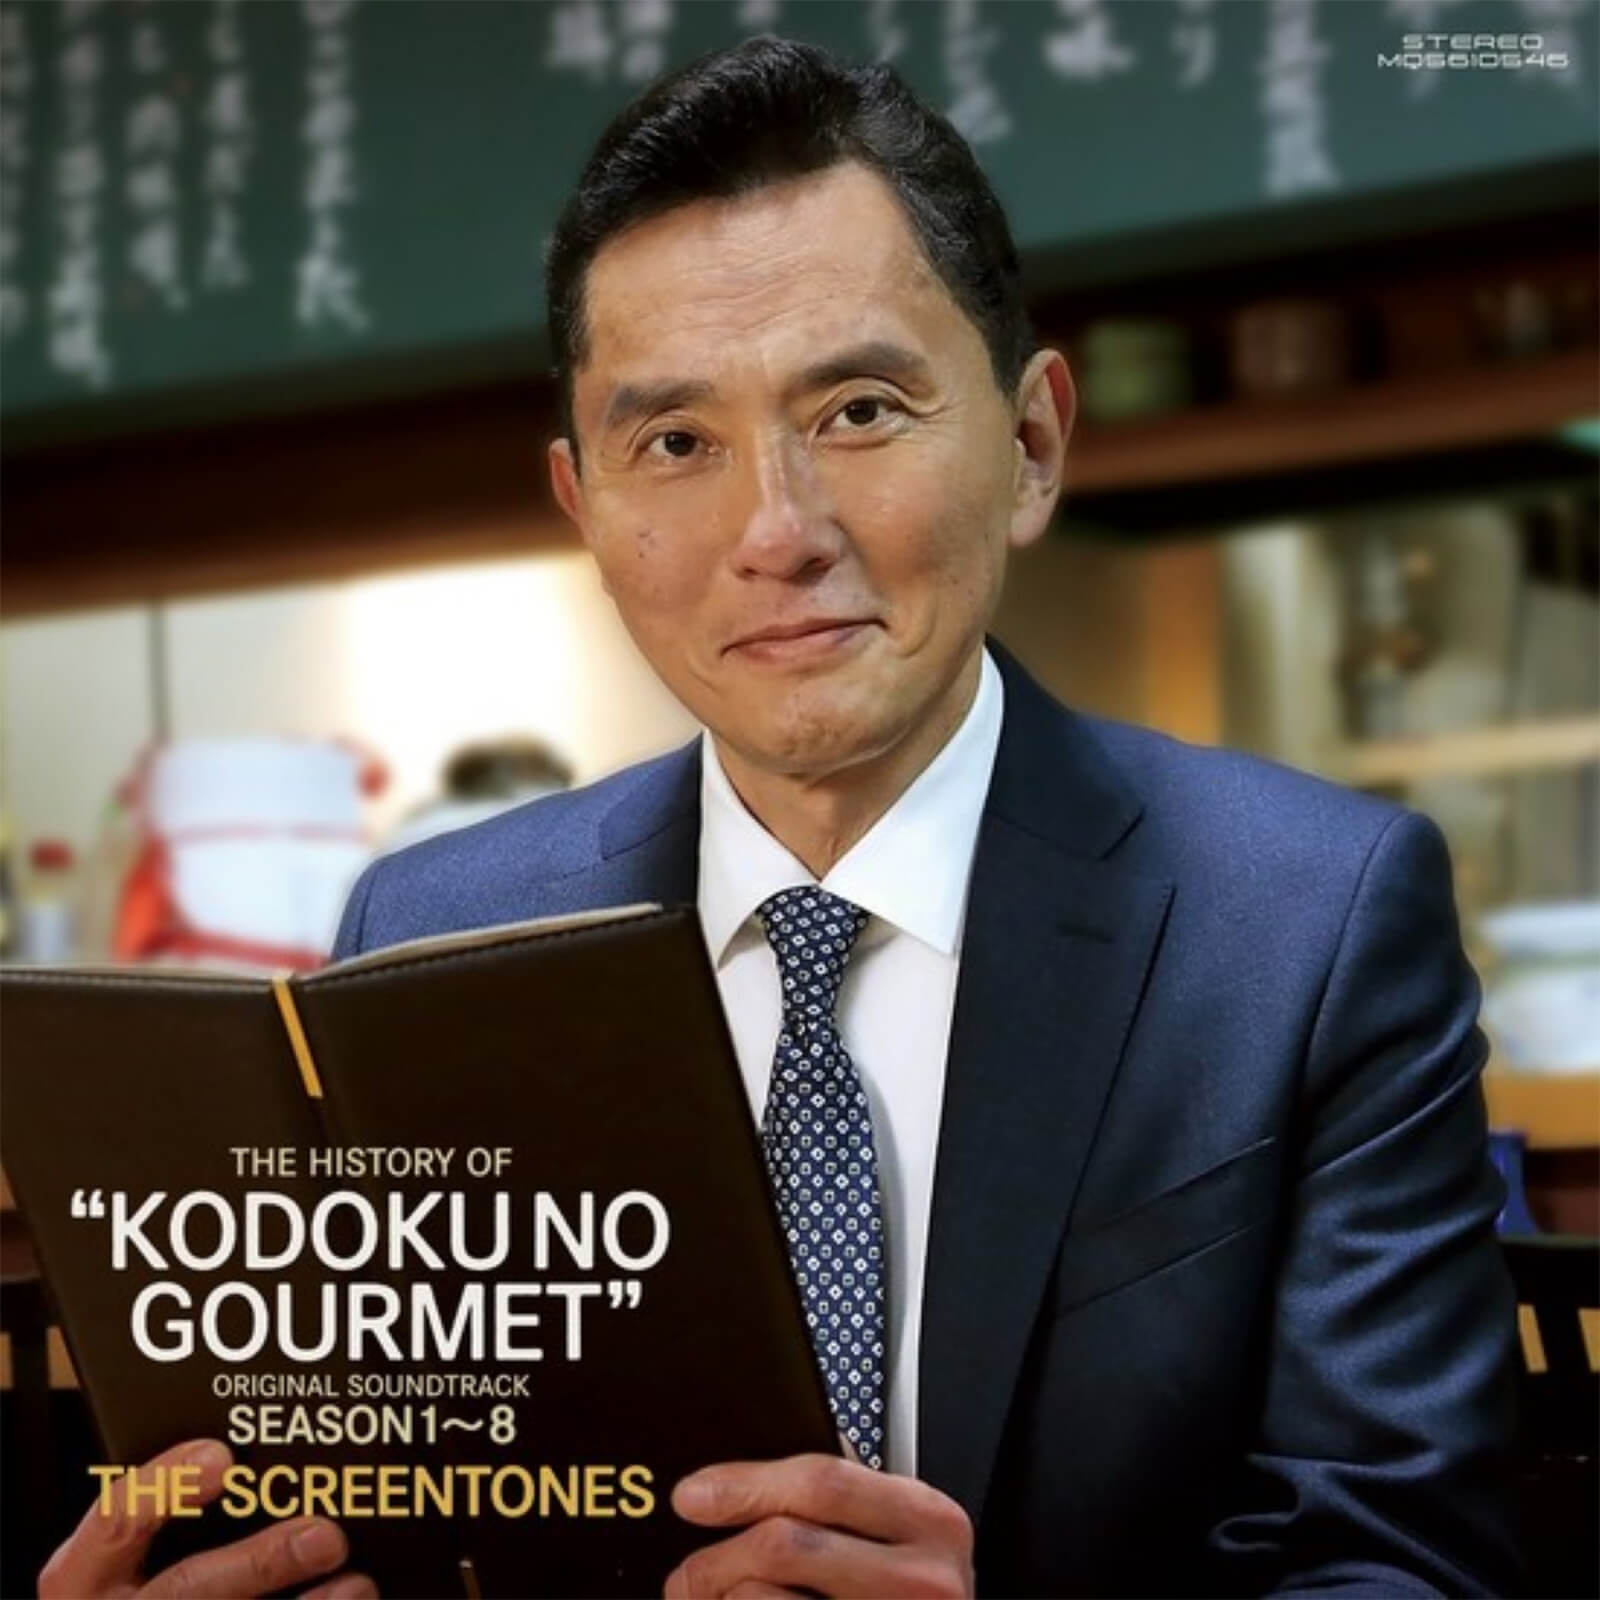 Hmv Record Shop - The history of kodoku no gourmet (original soundtrack season 1~8) lp